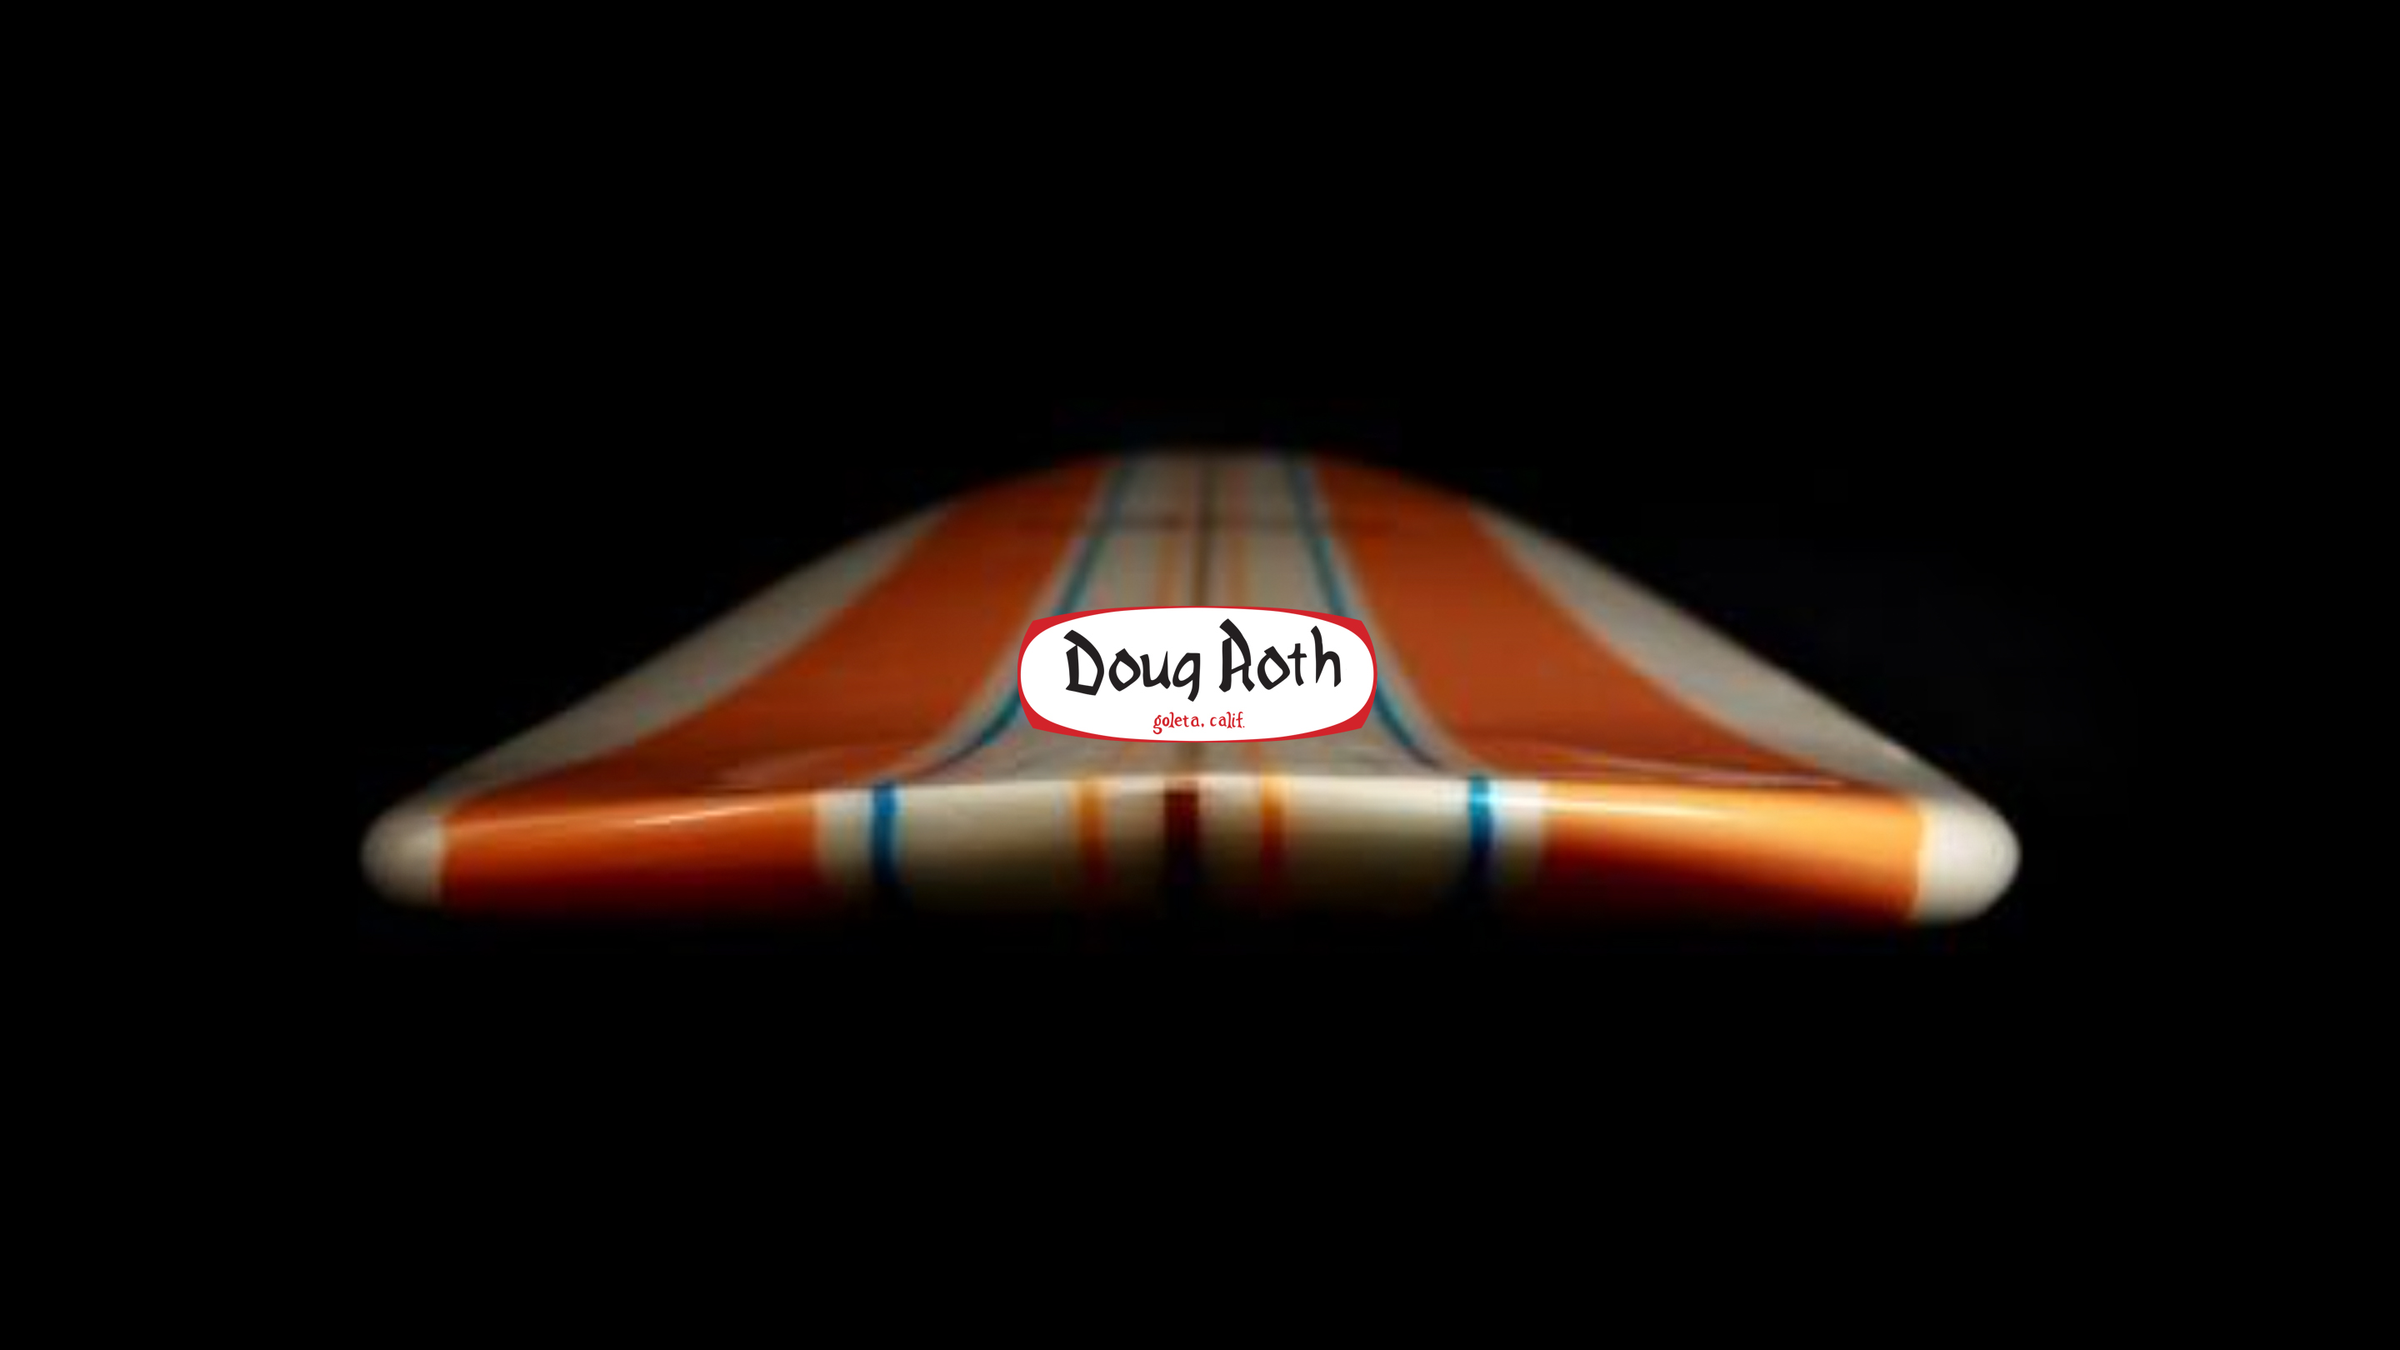 Doug Roth Surfboards